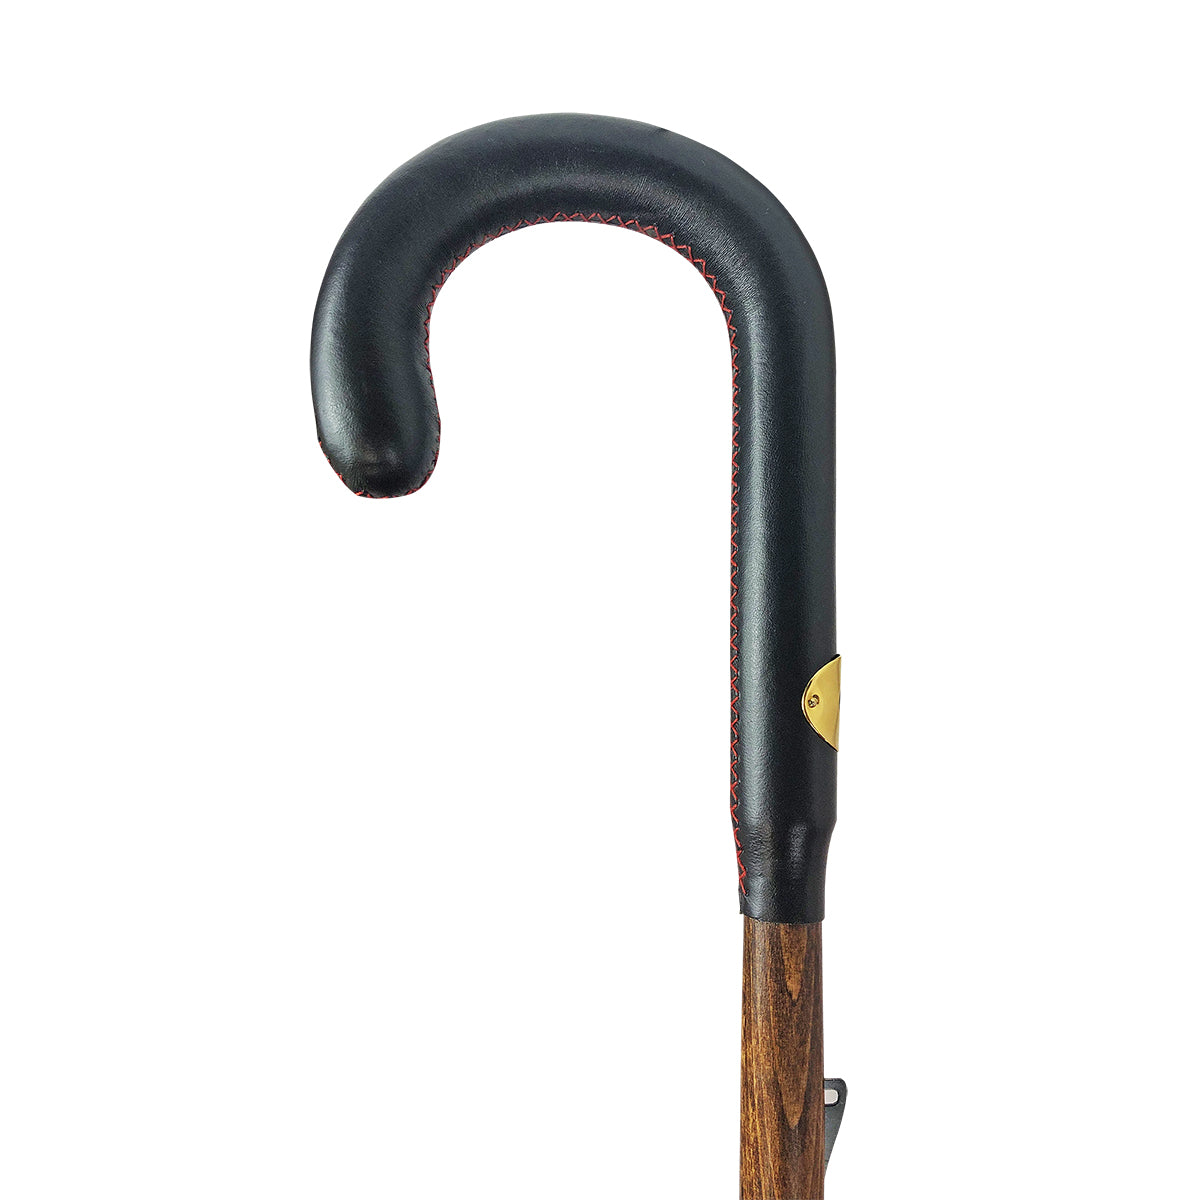 Classic men's umbrella with leather handle